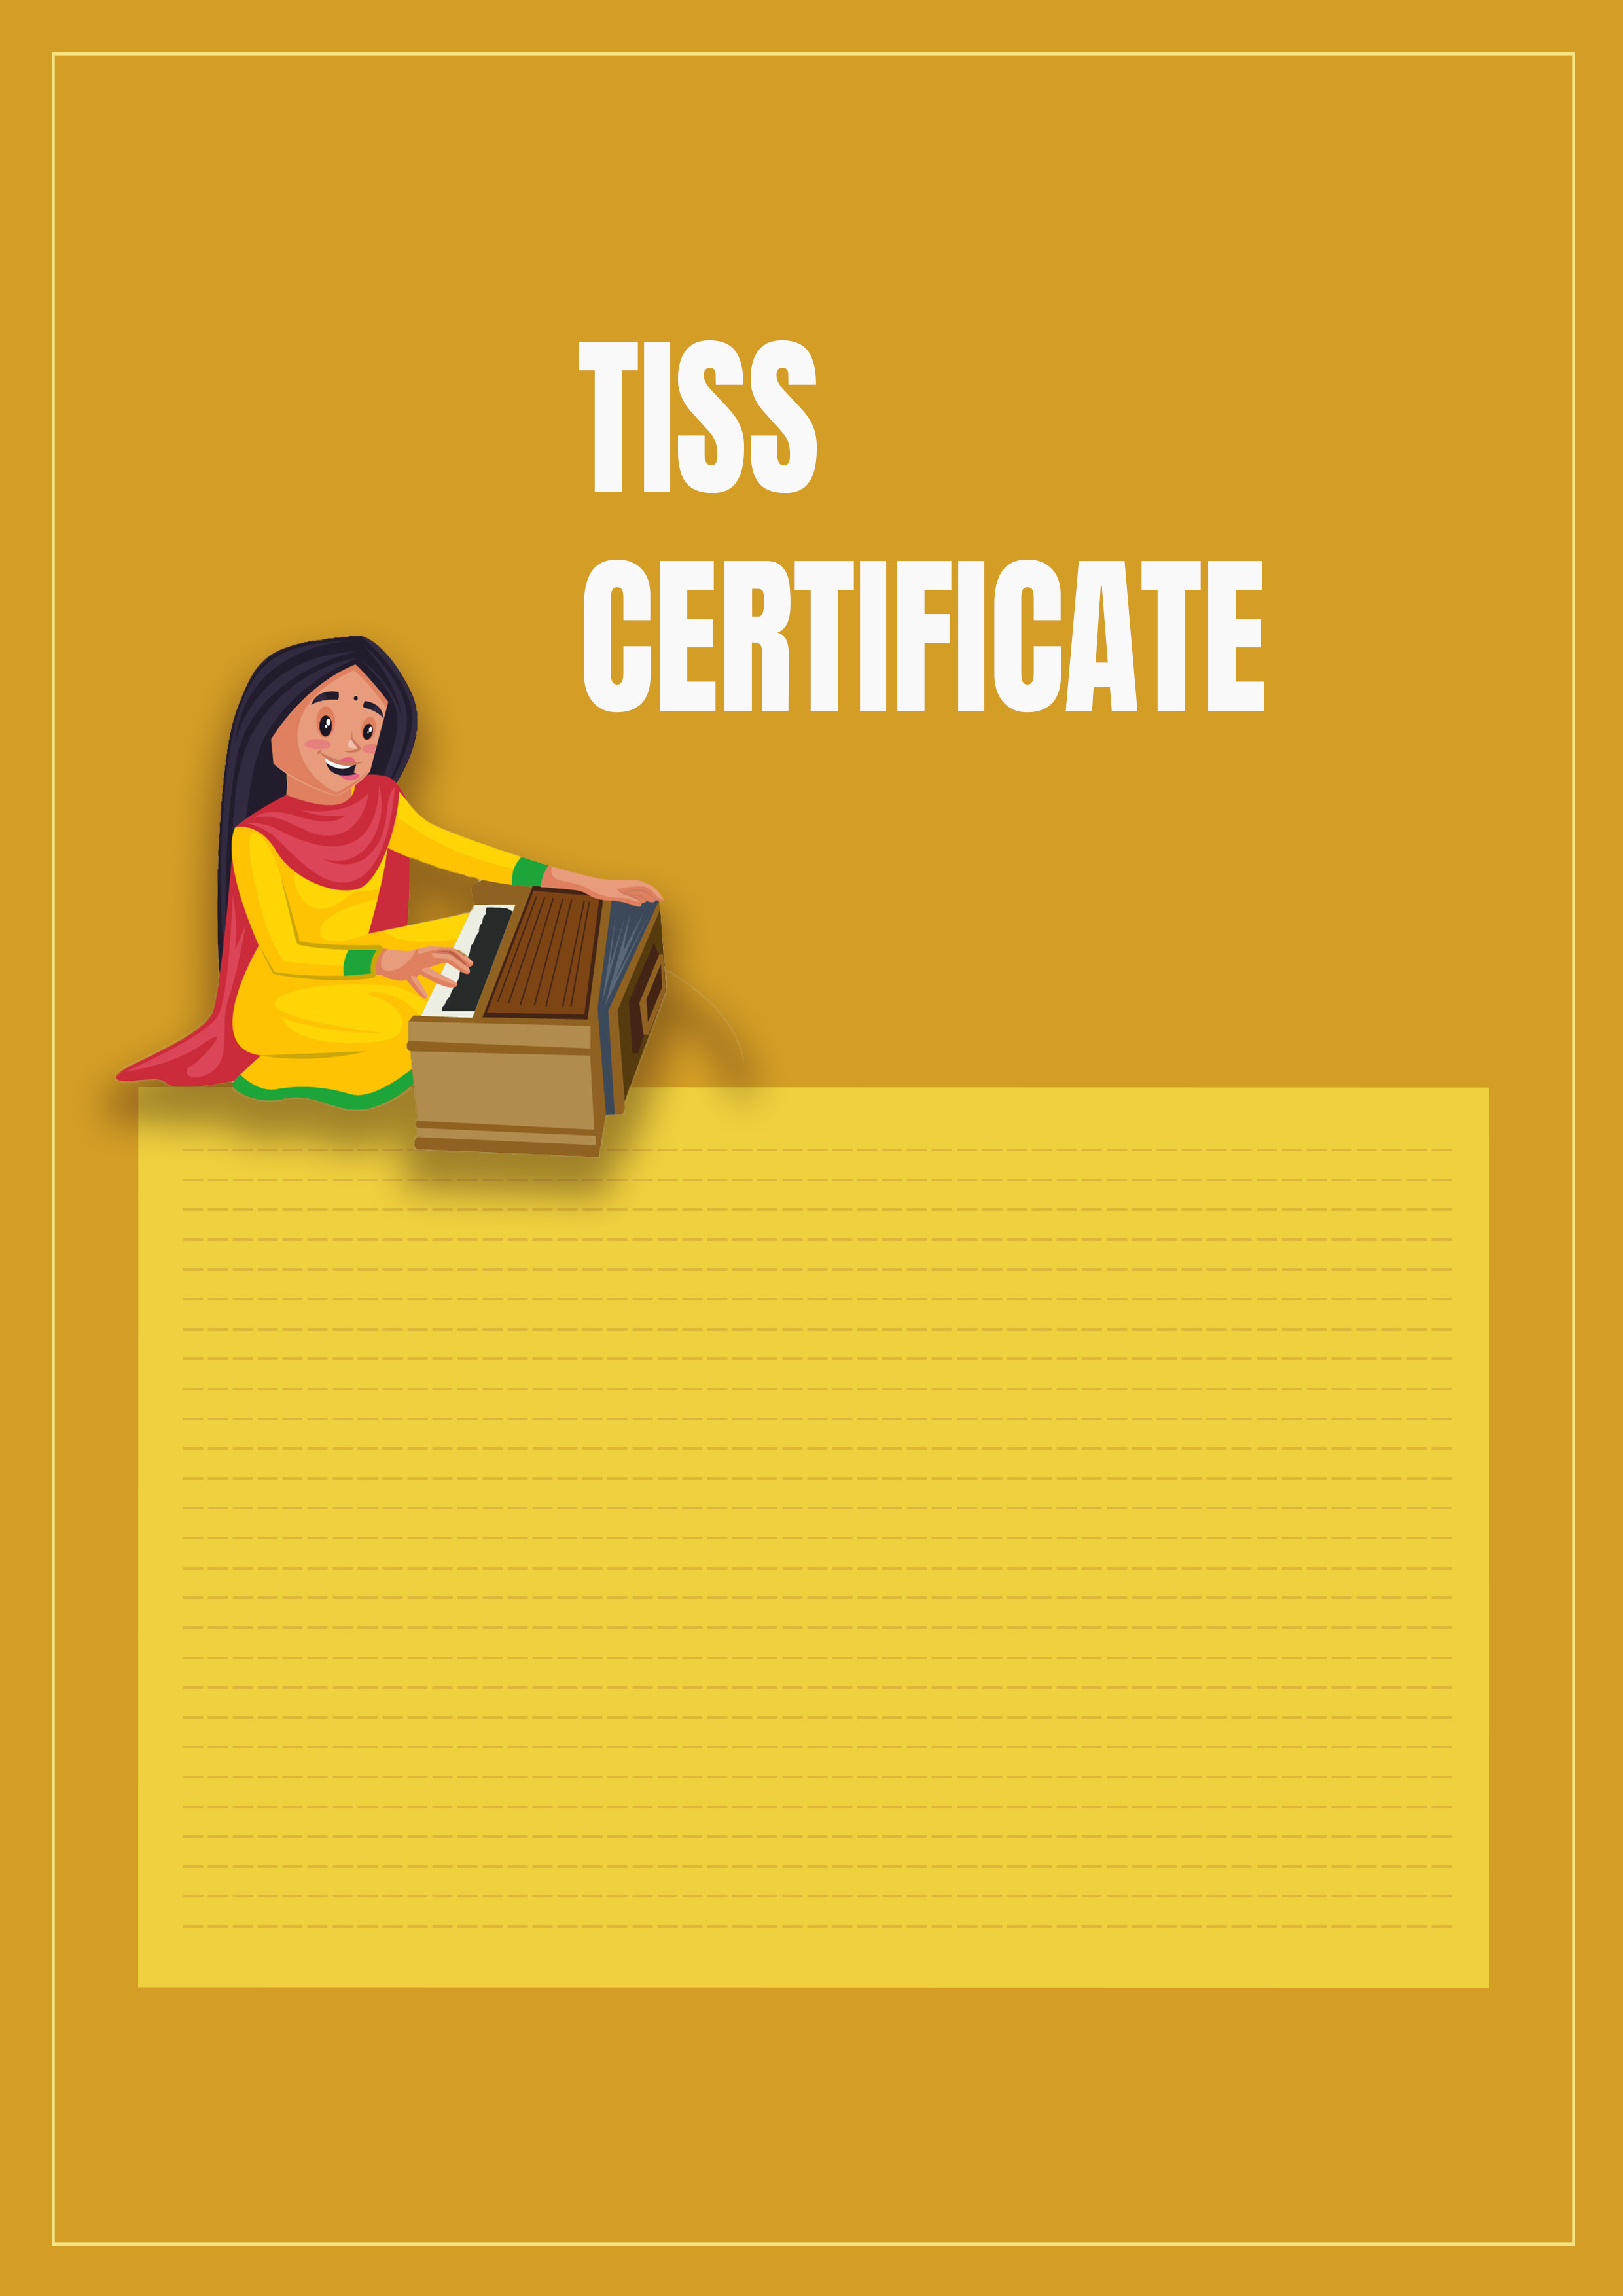 TISS Certificate